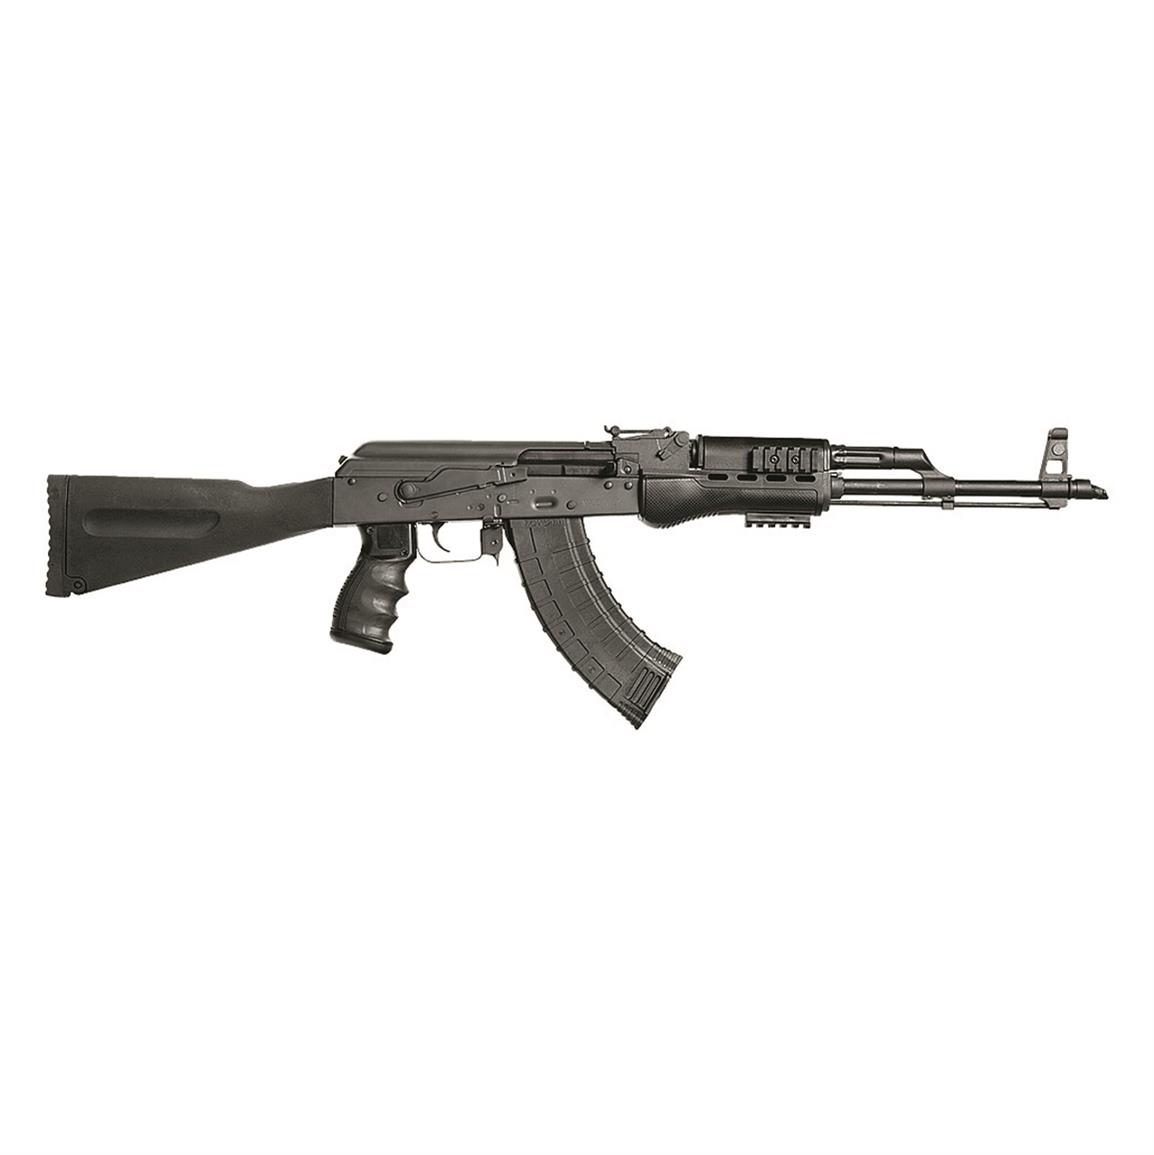 Blackheart Model B10B AK-47, Semi-Automatic, 7.62x39mm, 16.25" Barrel, 30+1 Rounds